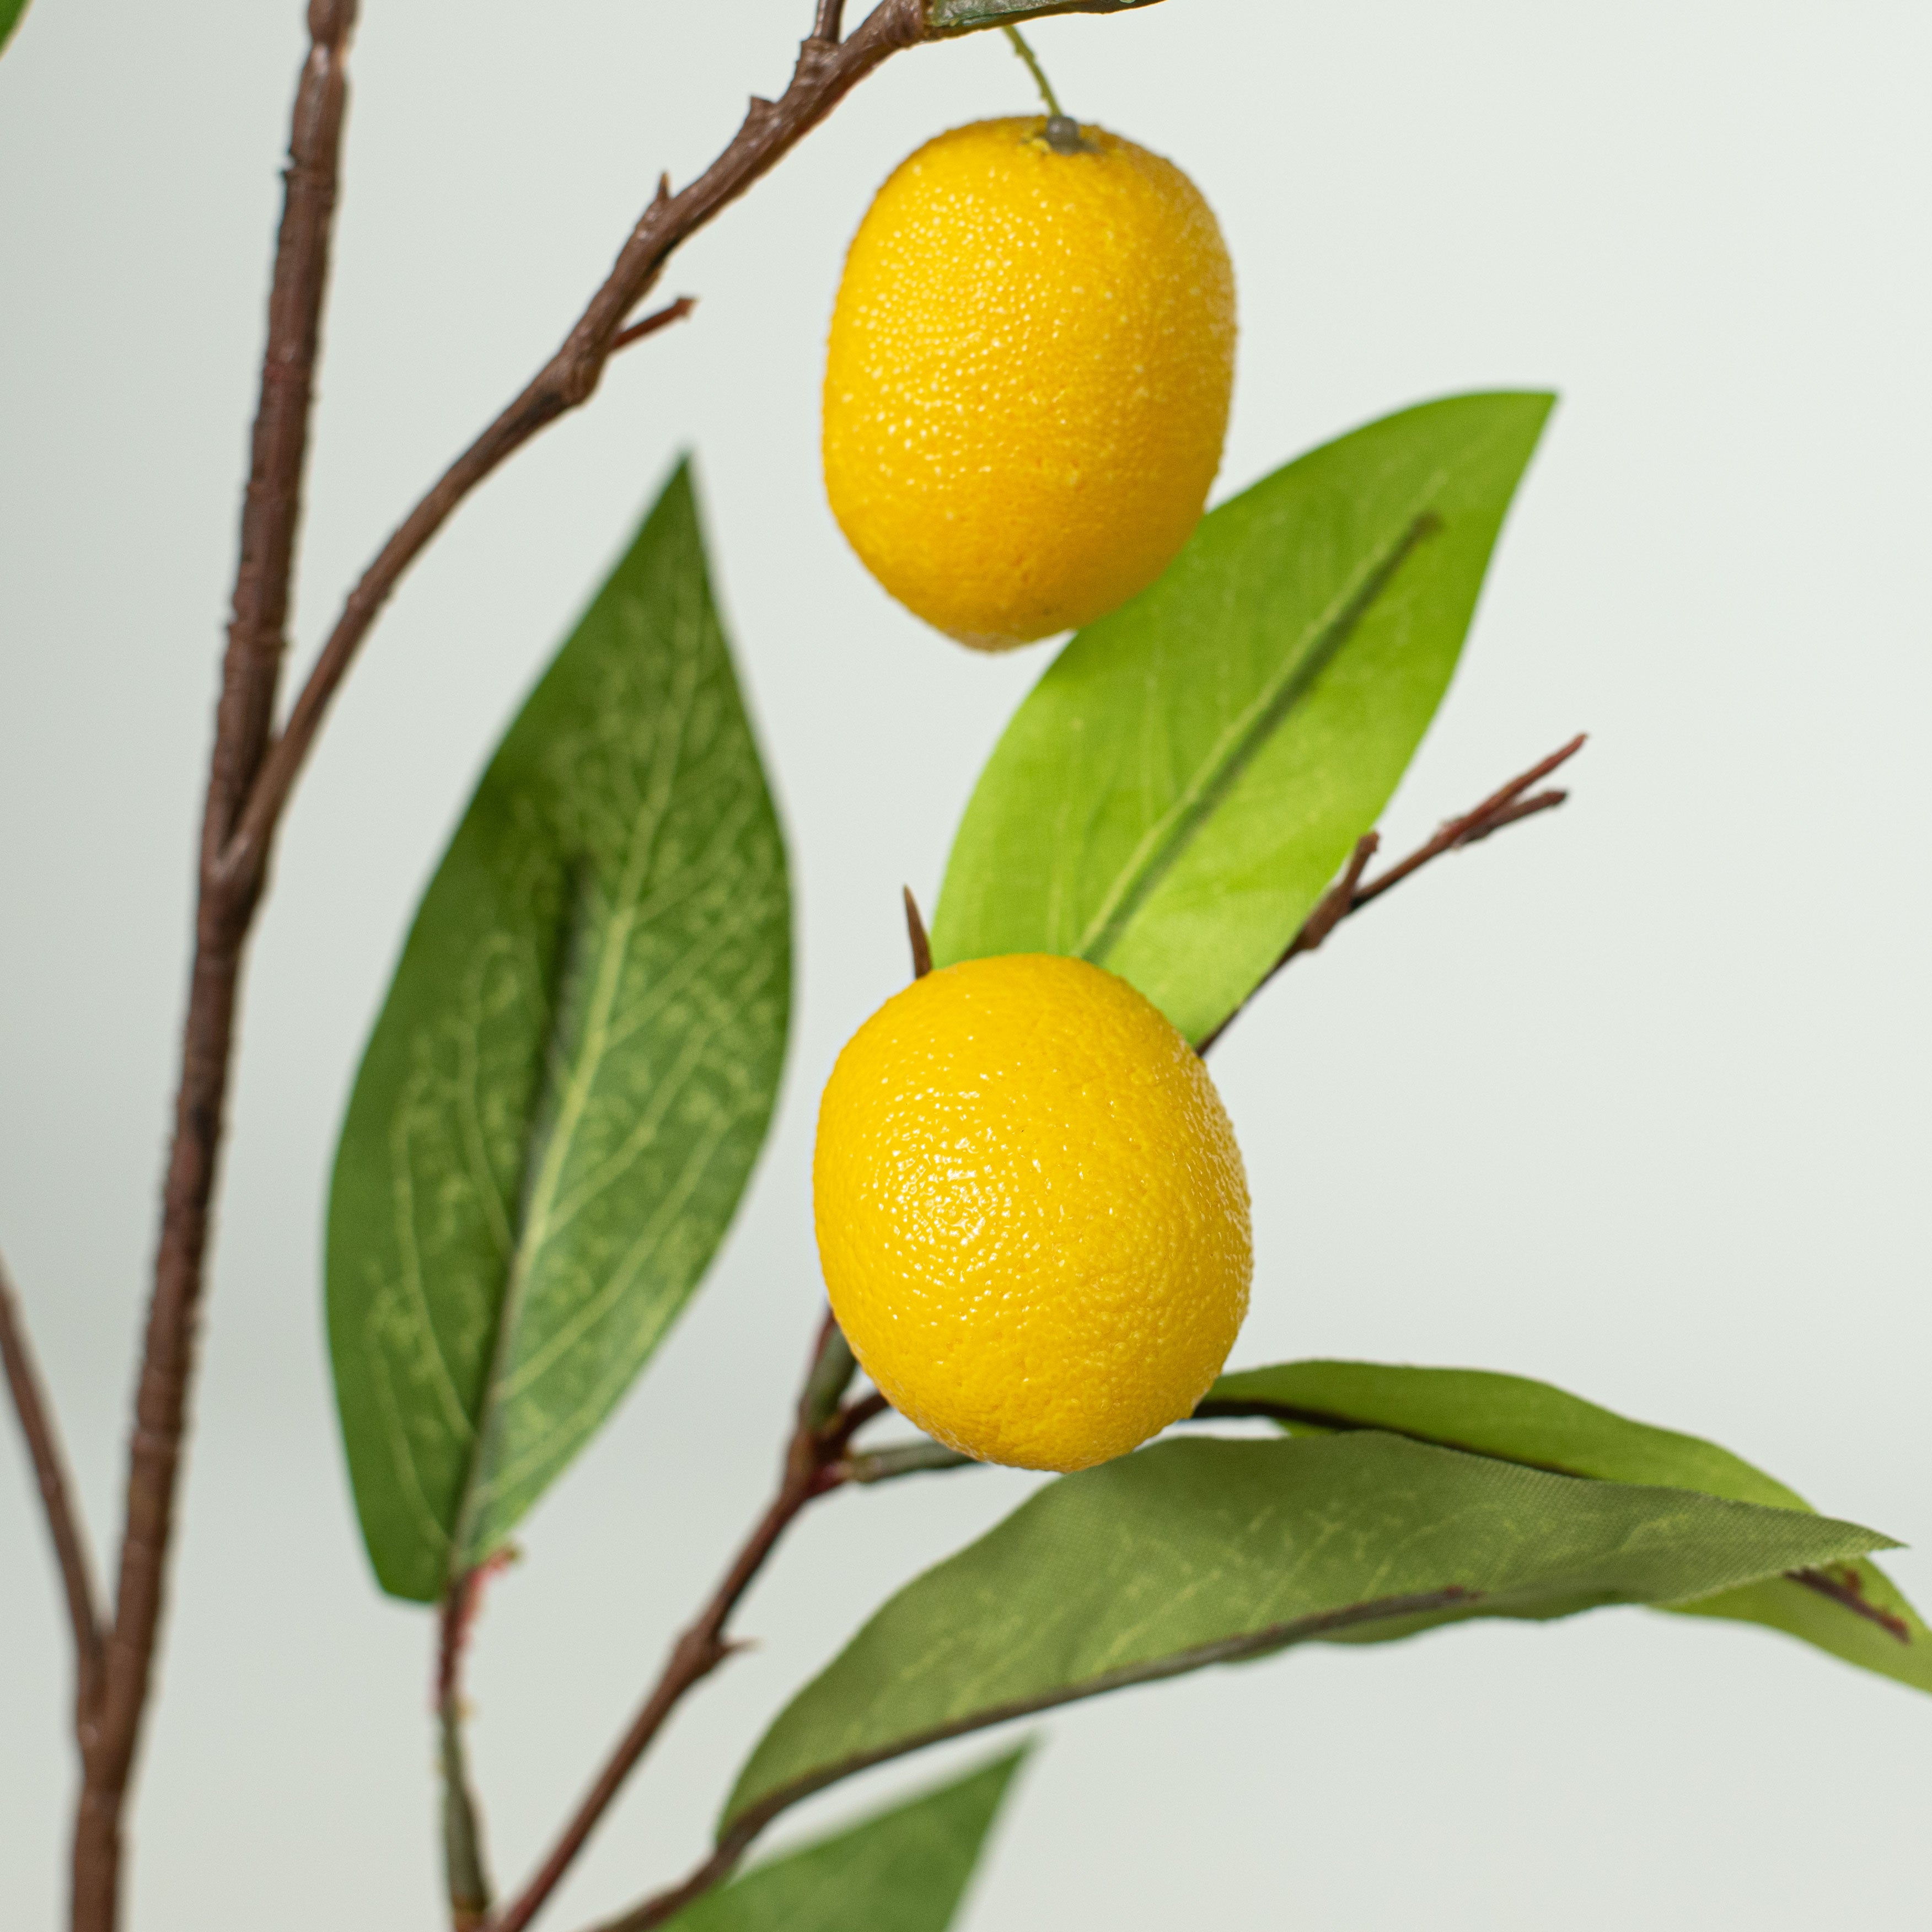 38" Lemon Branch